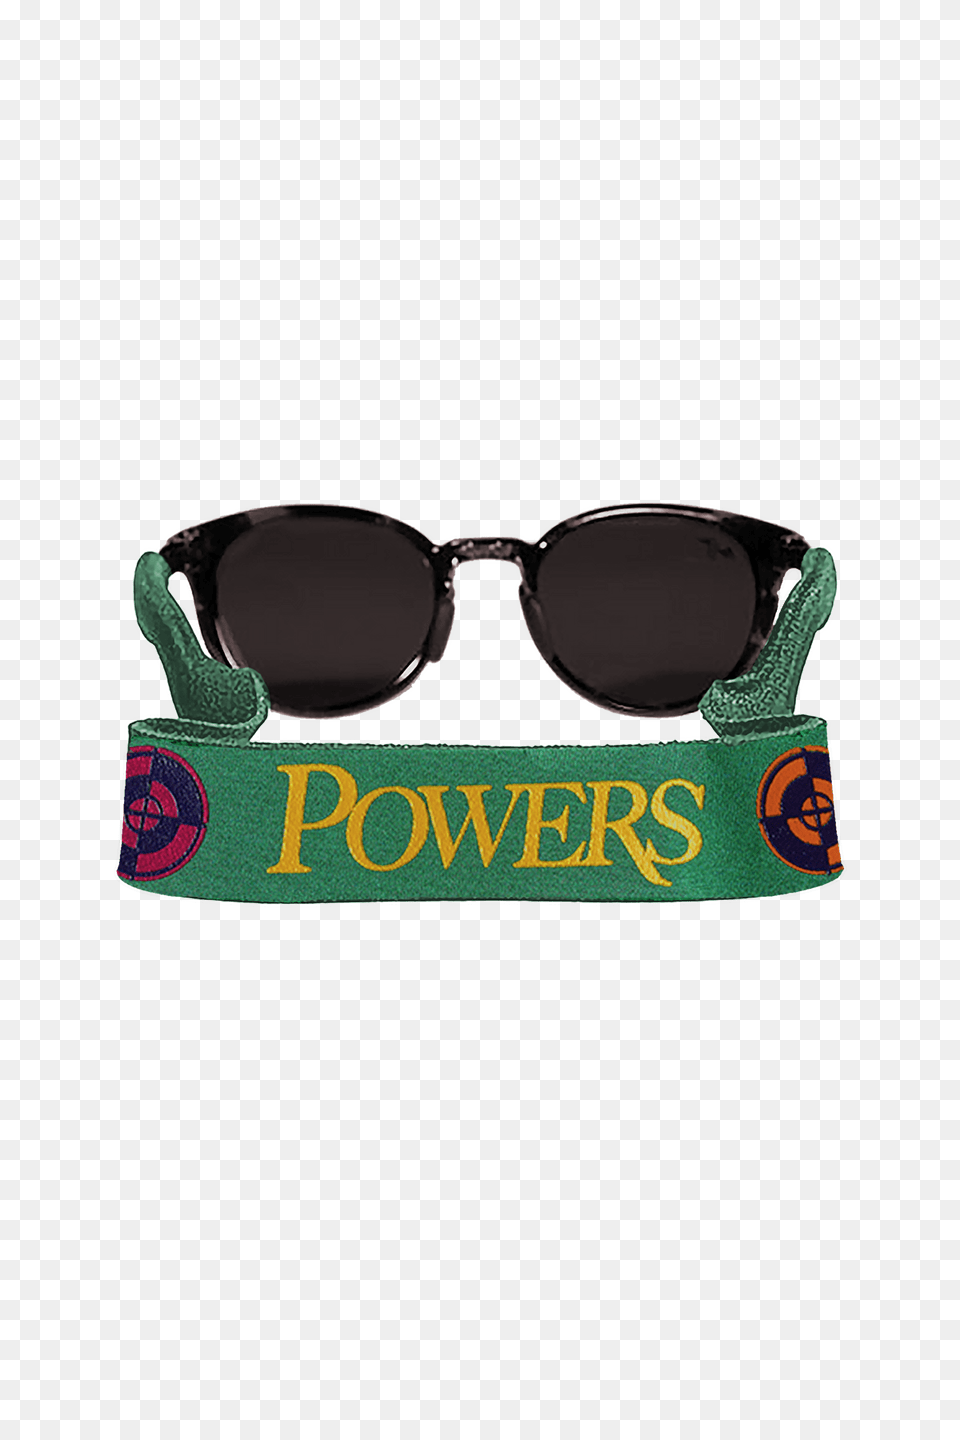 Powers Supply Drop Tees Hoodies Accessories Hypebeast, Sunglasses Png Image